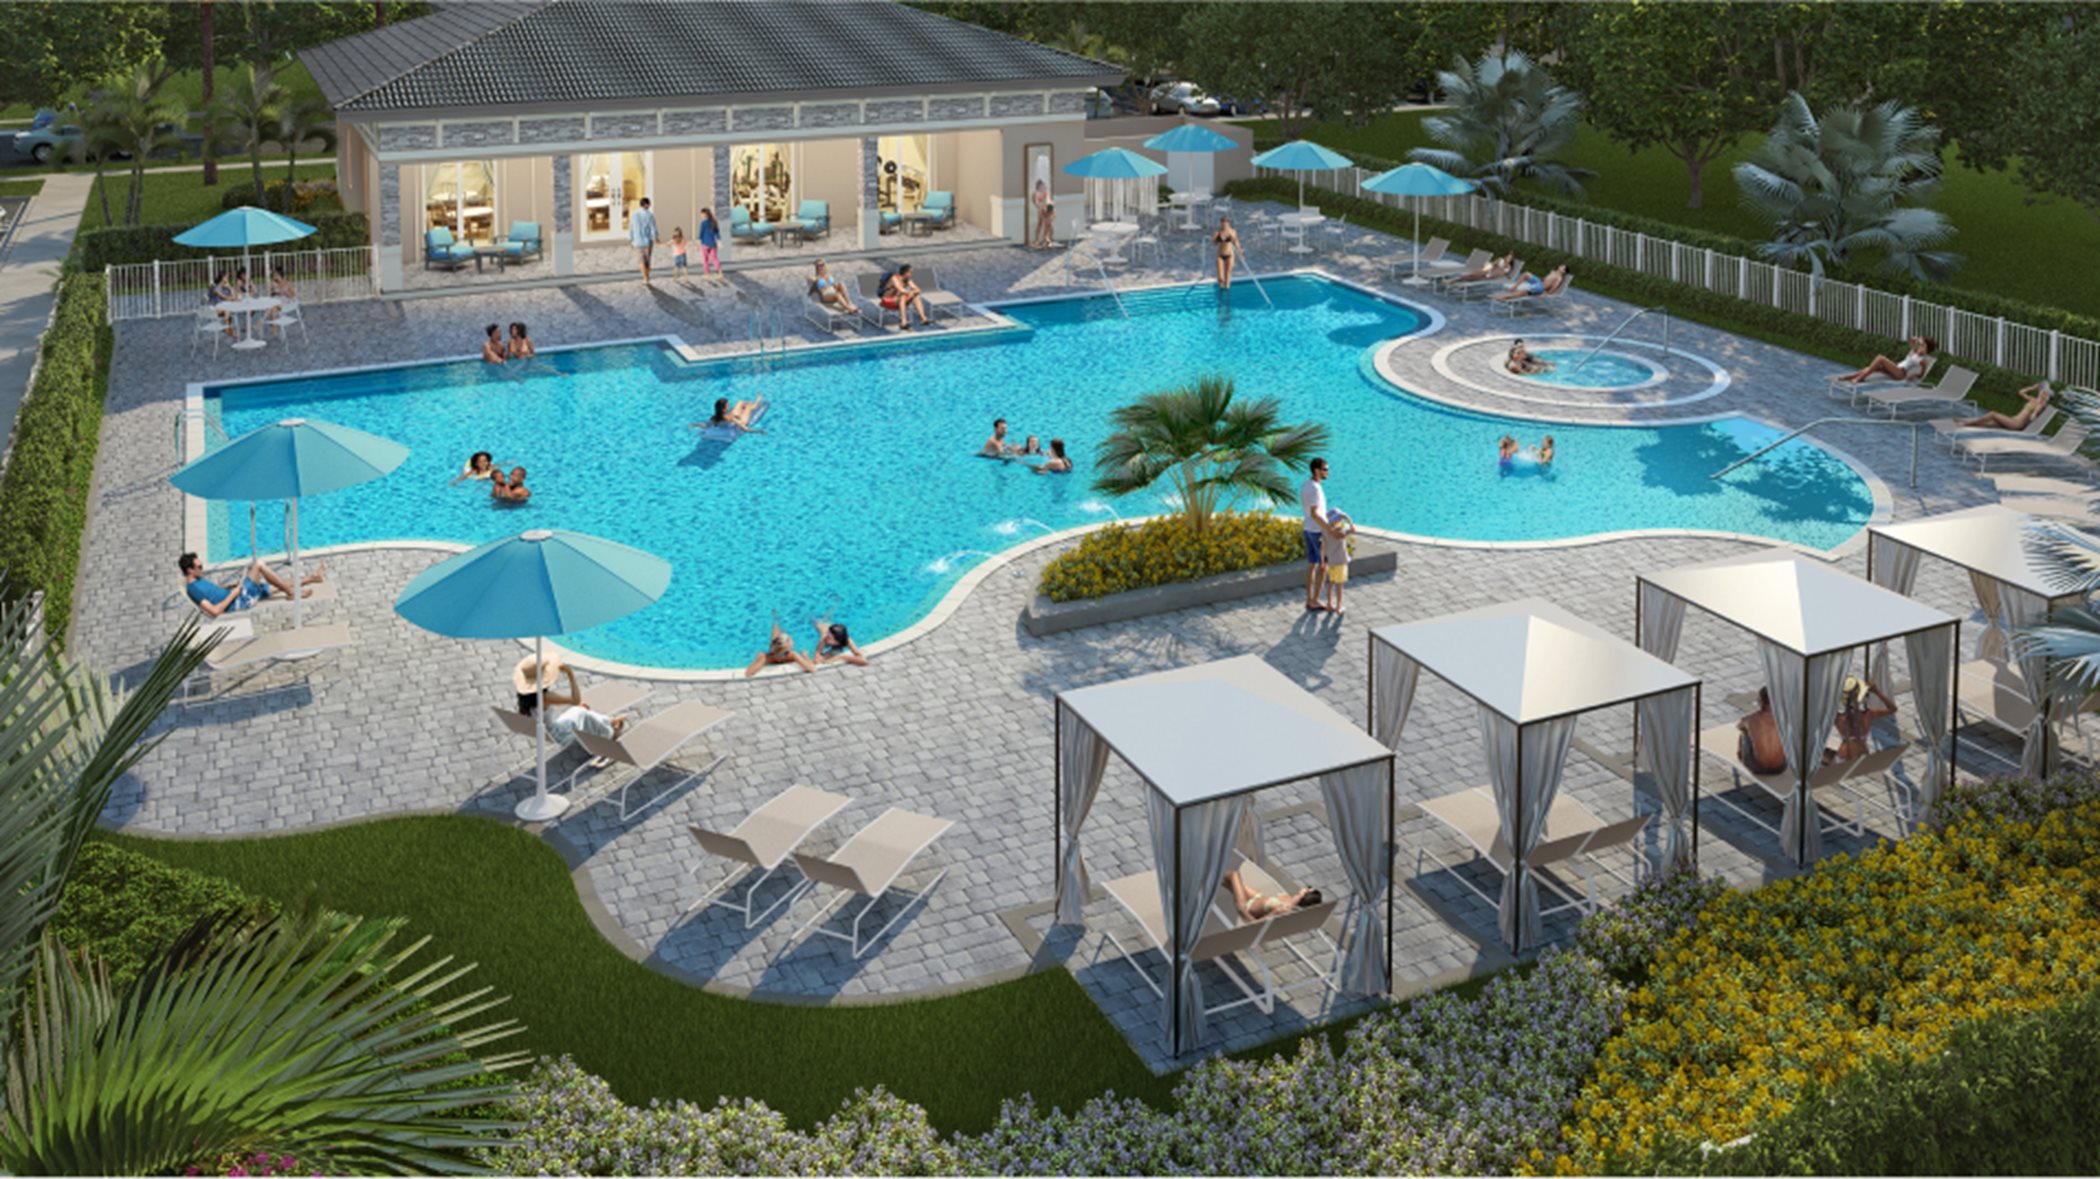 The Riviera resort-style pool